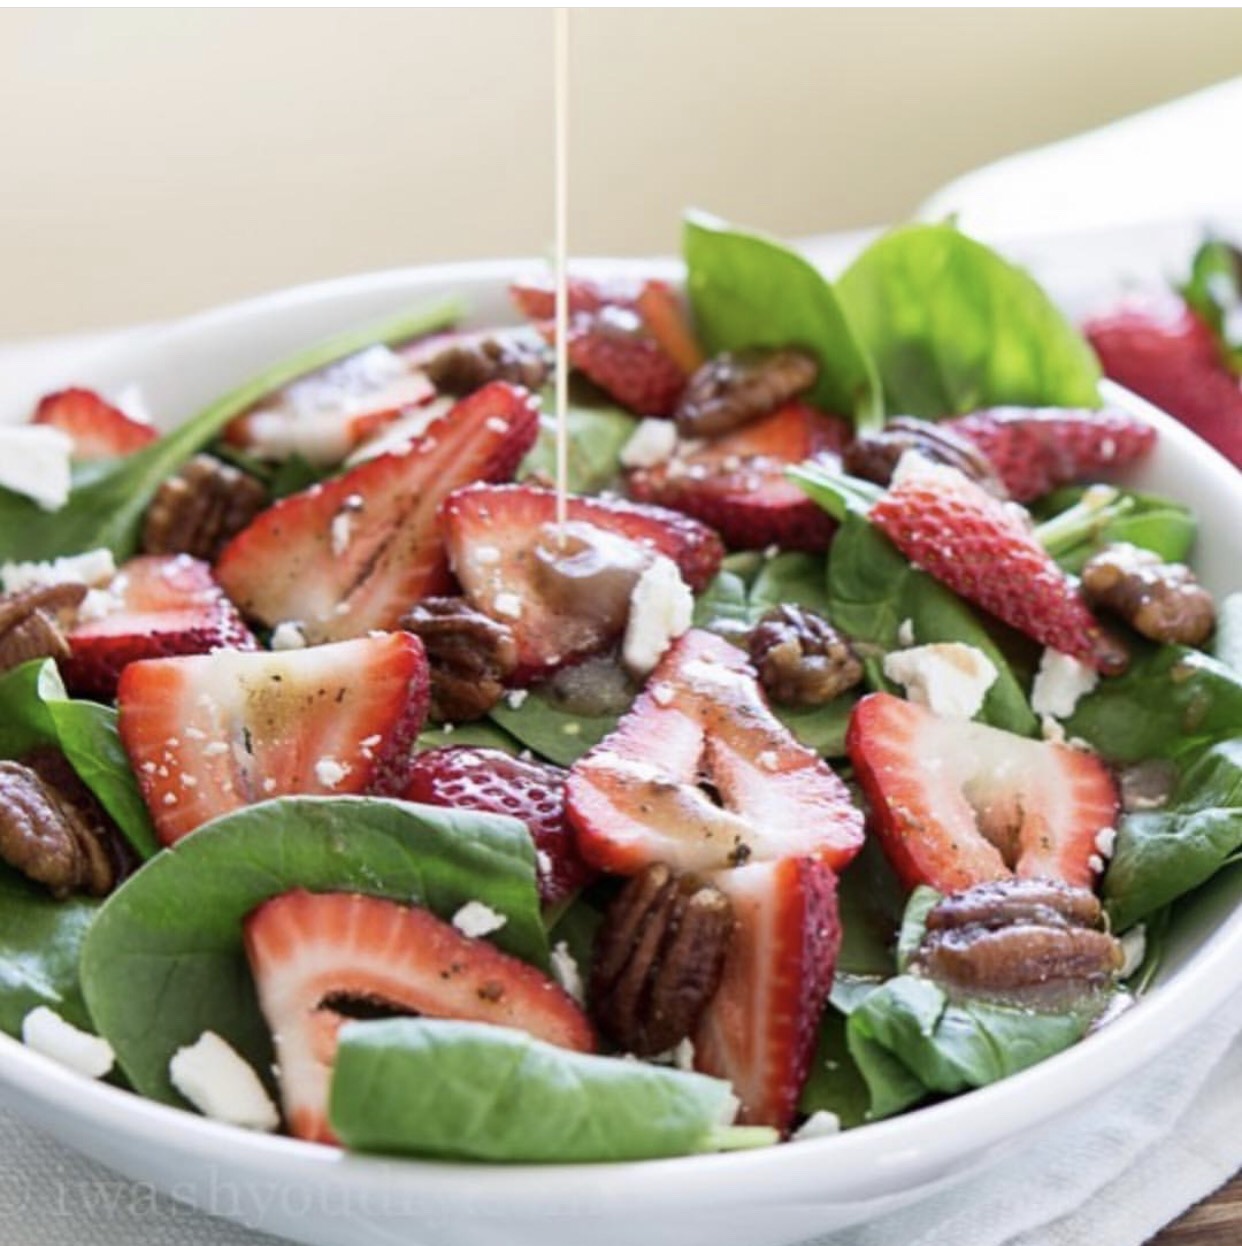 Strawberry Salad